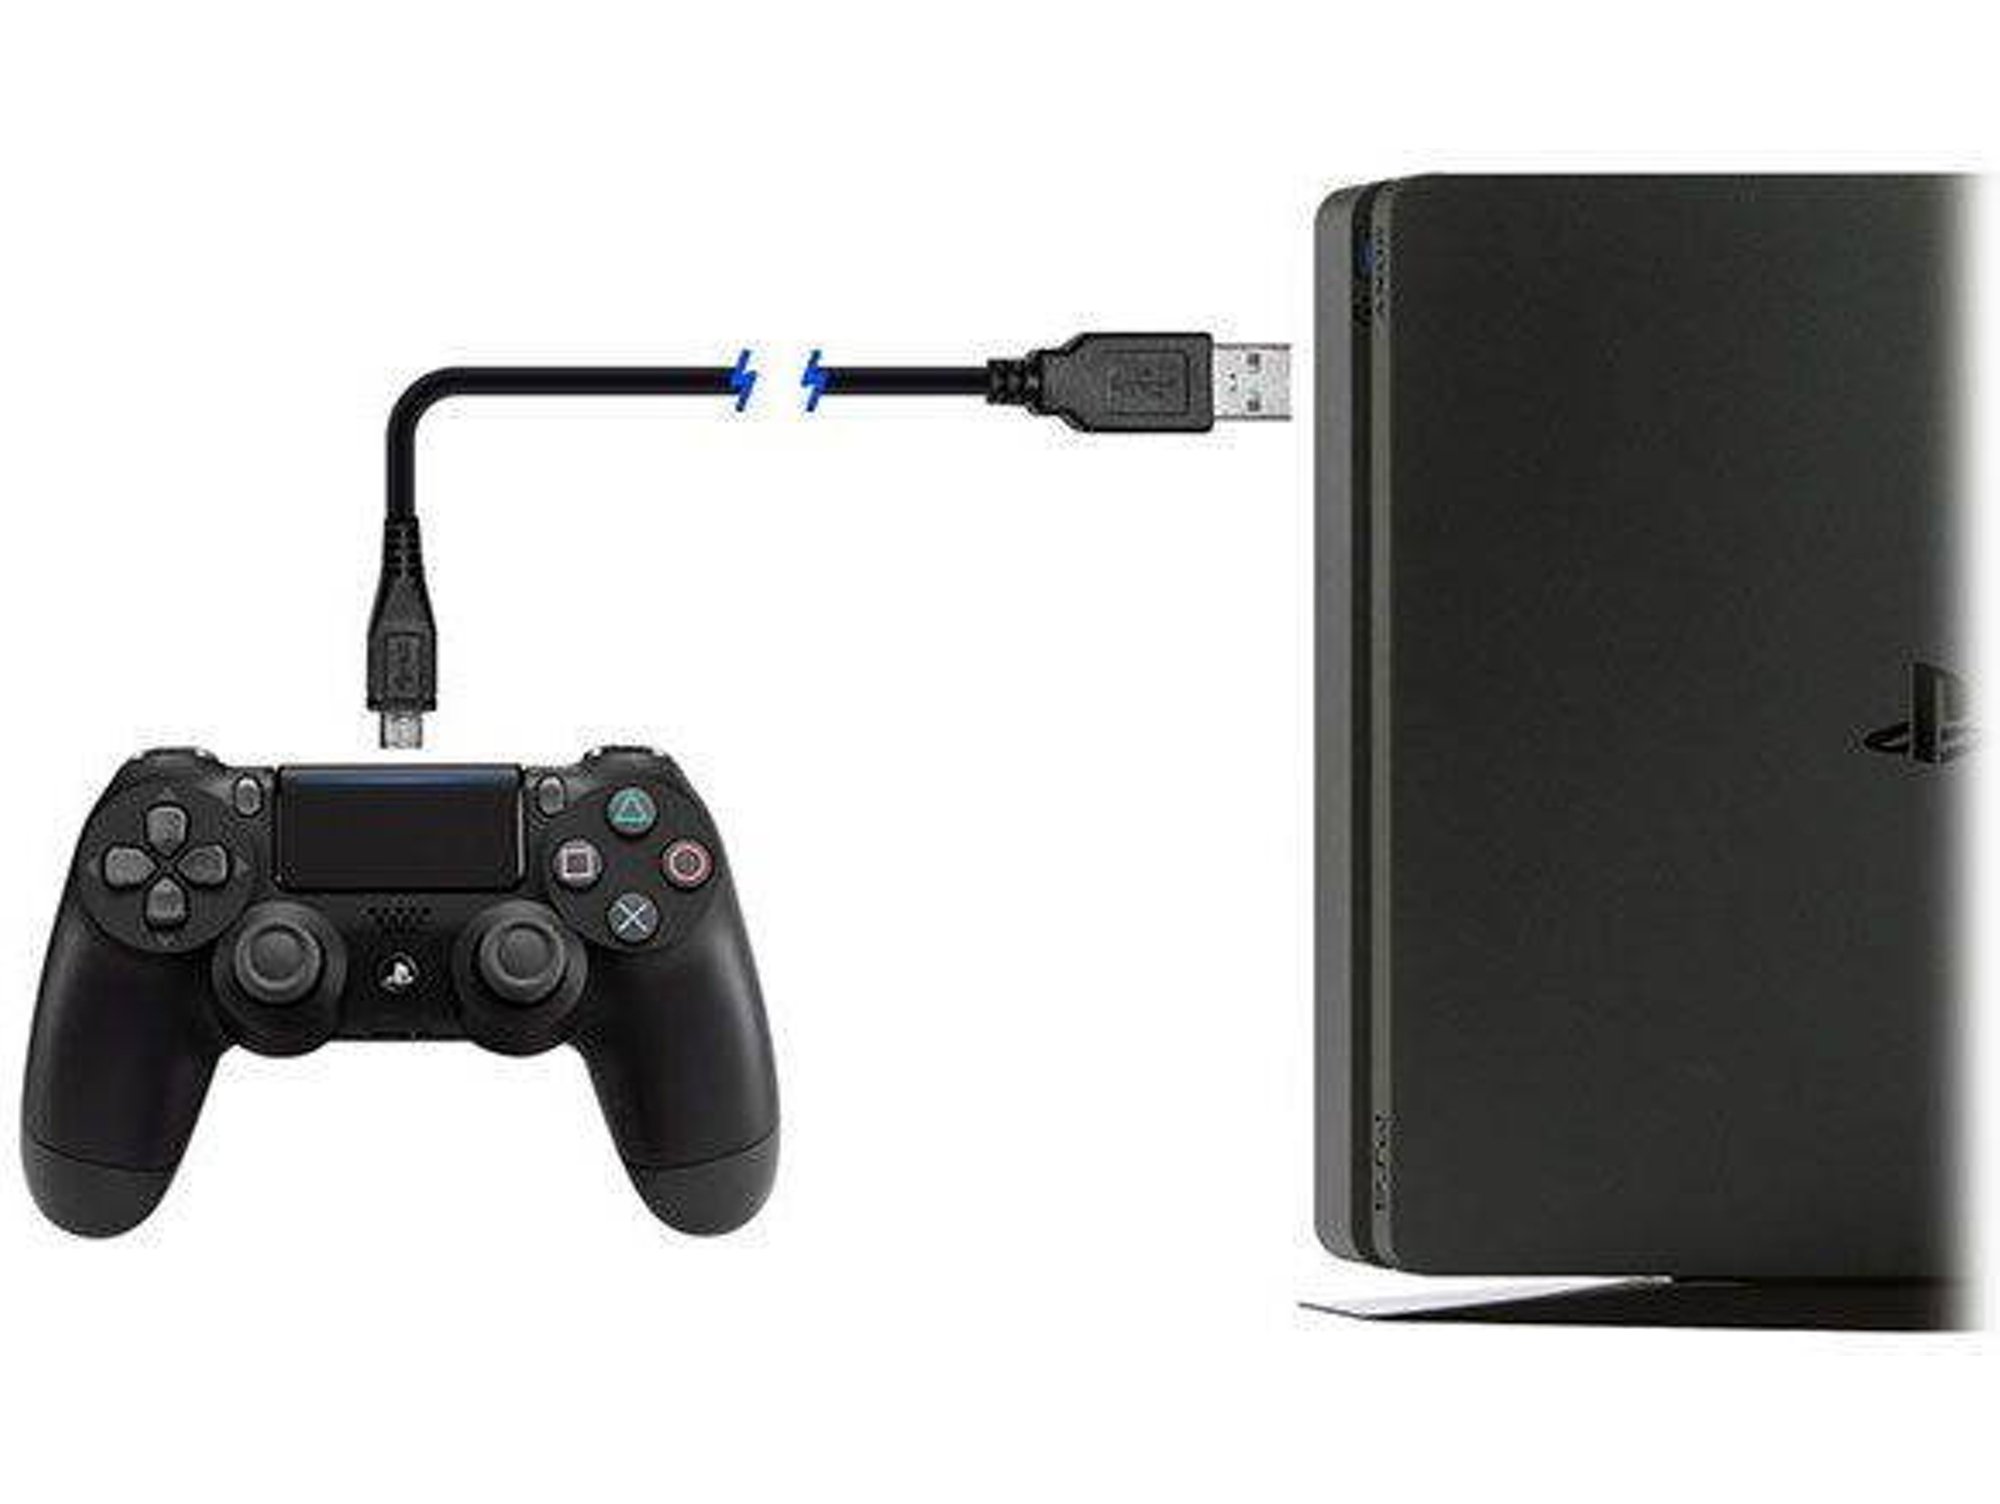 Cable de carga ARDISTEL Blackfire para Dualshock PS4